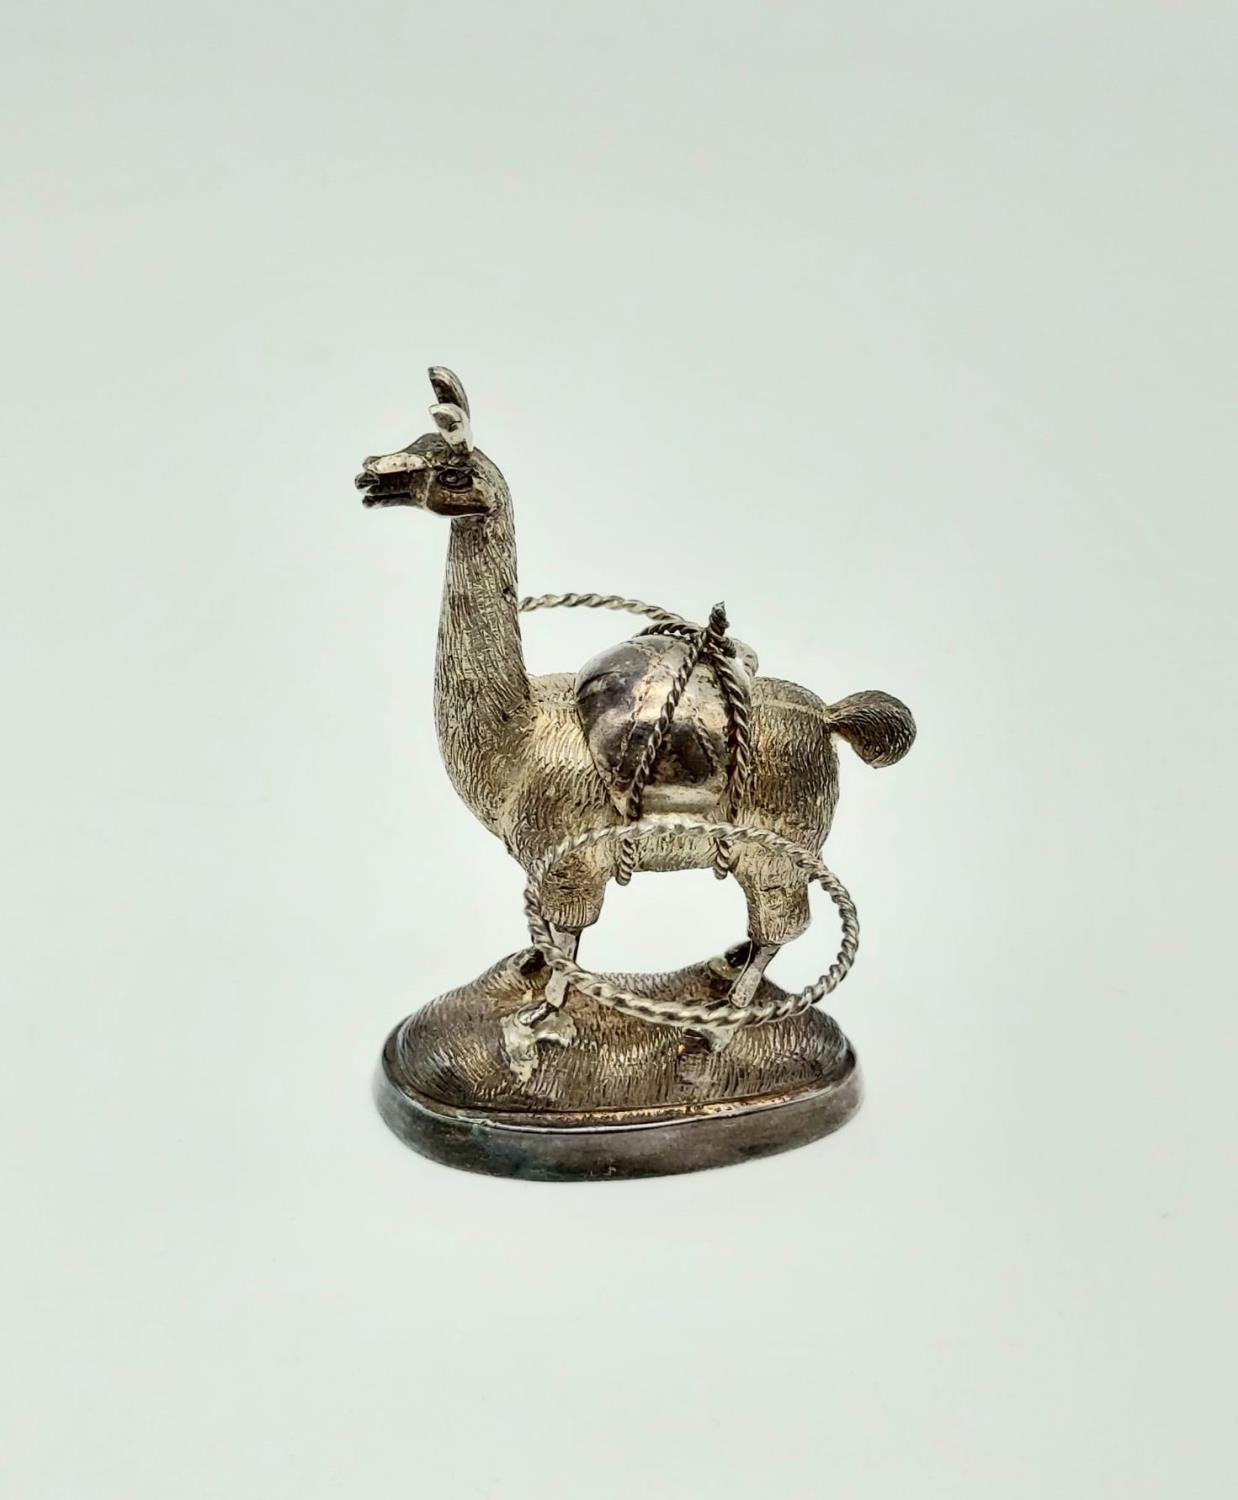 An Antique Peruvian Novelty Cruet Salt and Pepper Set Housed on a Llamas Back. Hallmarked silver - - Image 8 of 15